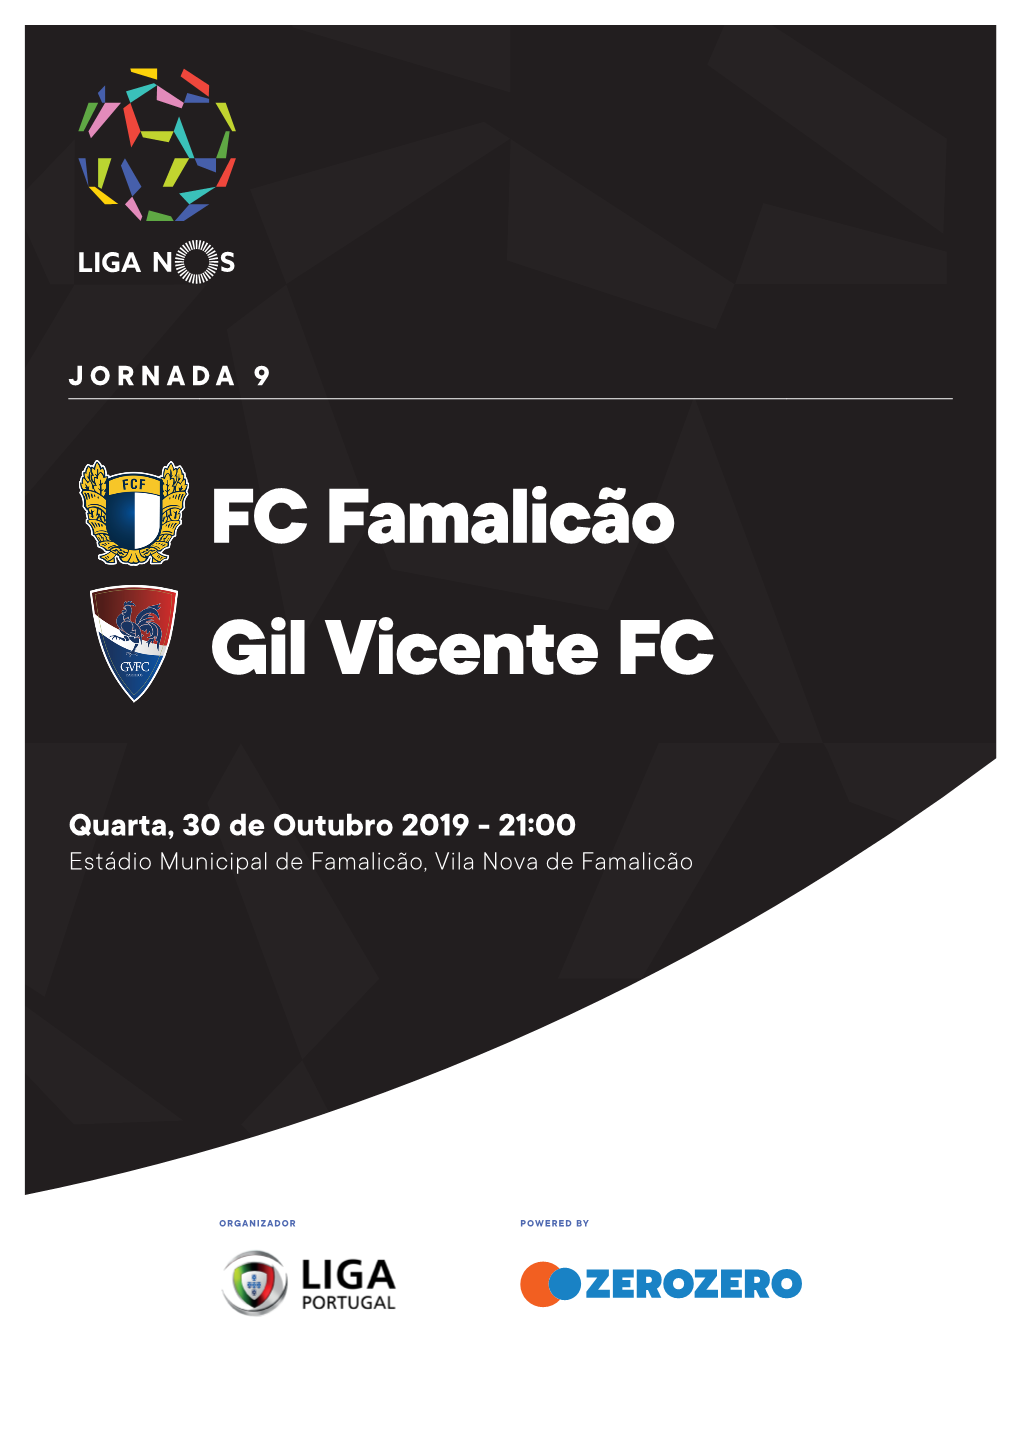 FC Famalicão Gil Vicente FC